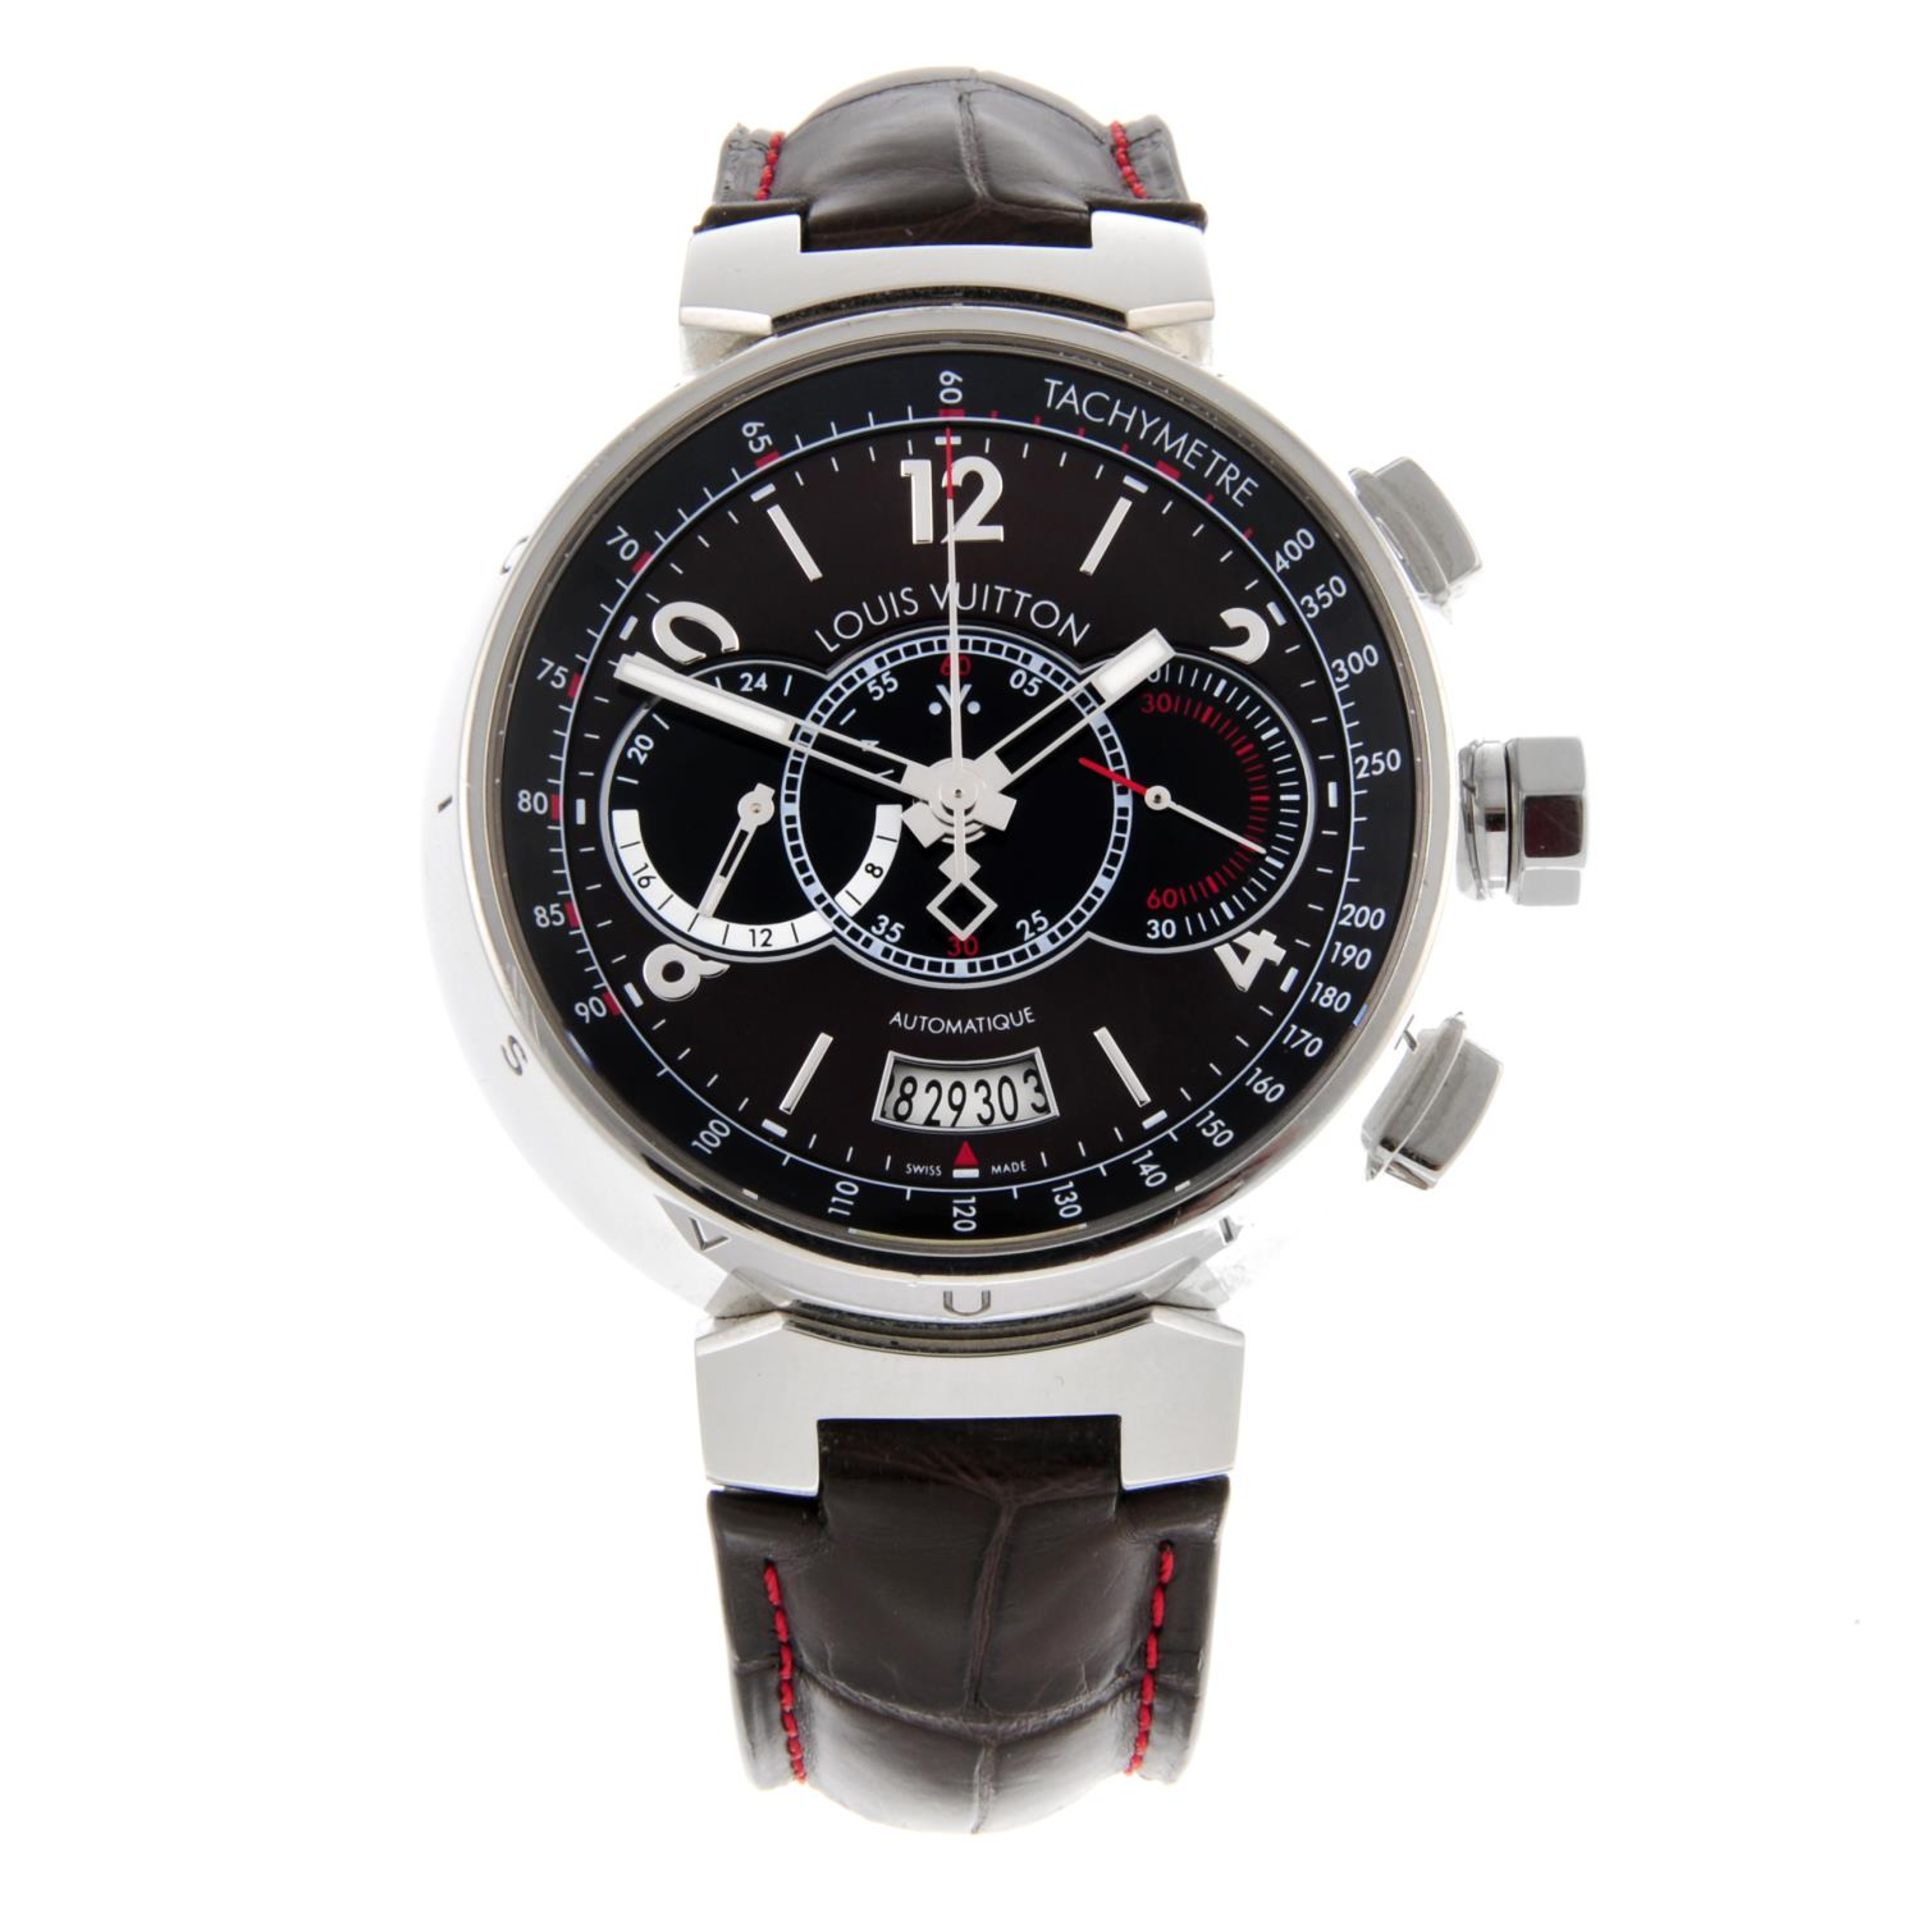 LOUIS VUITTON - a limited edition gentleman's Tambour chronograph wrist watch.